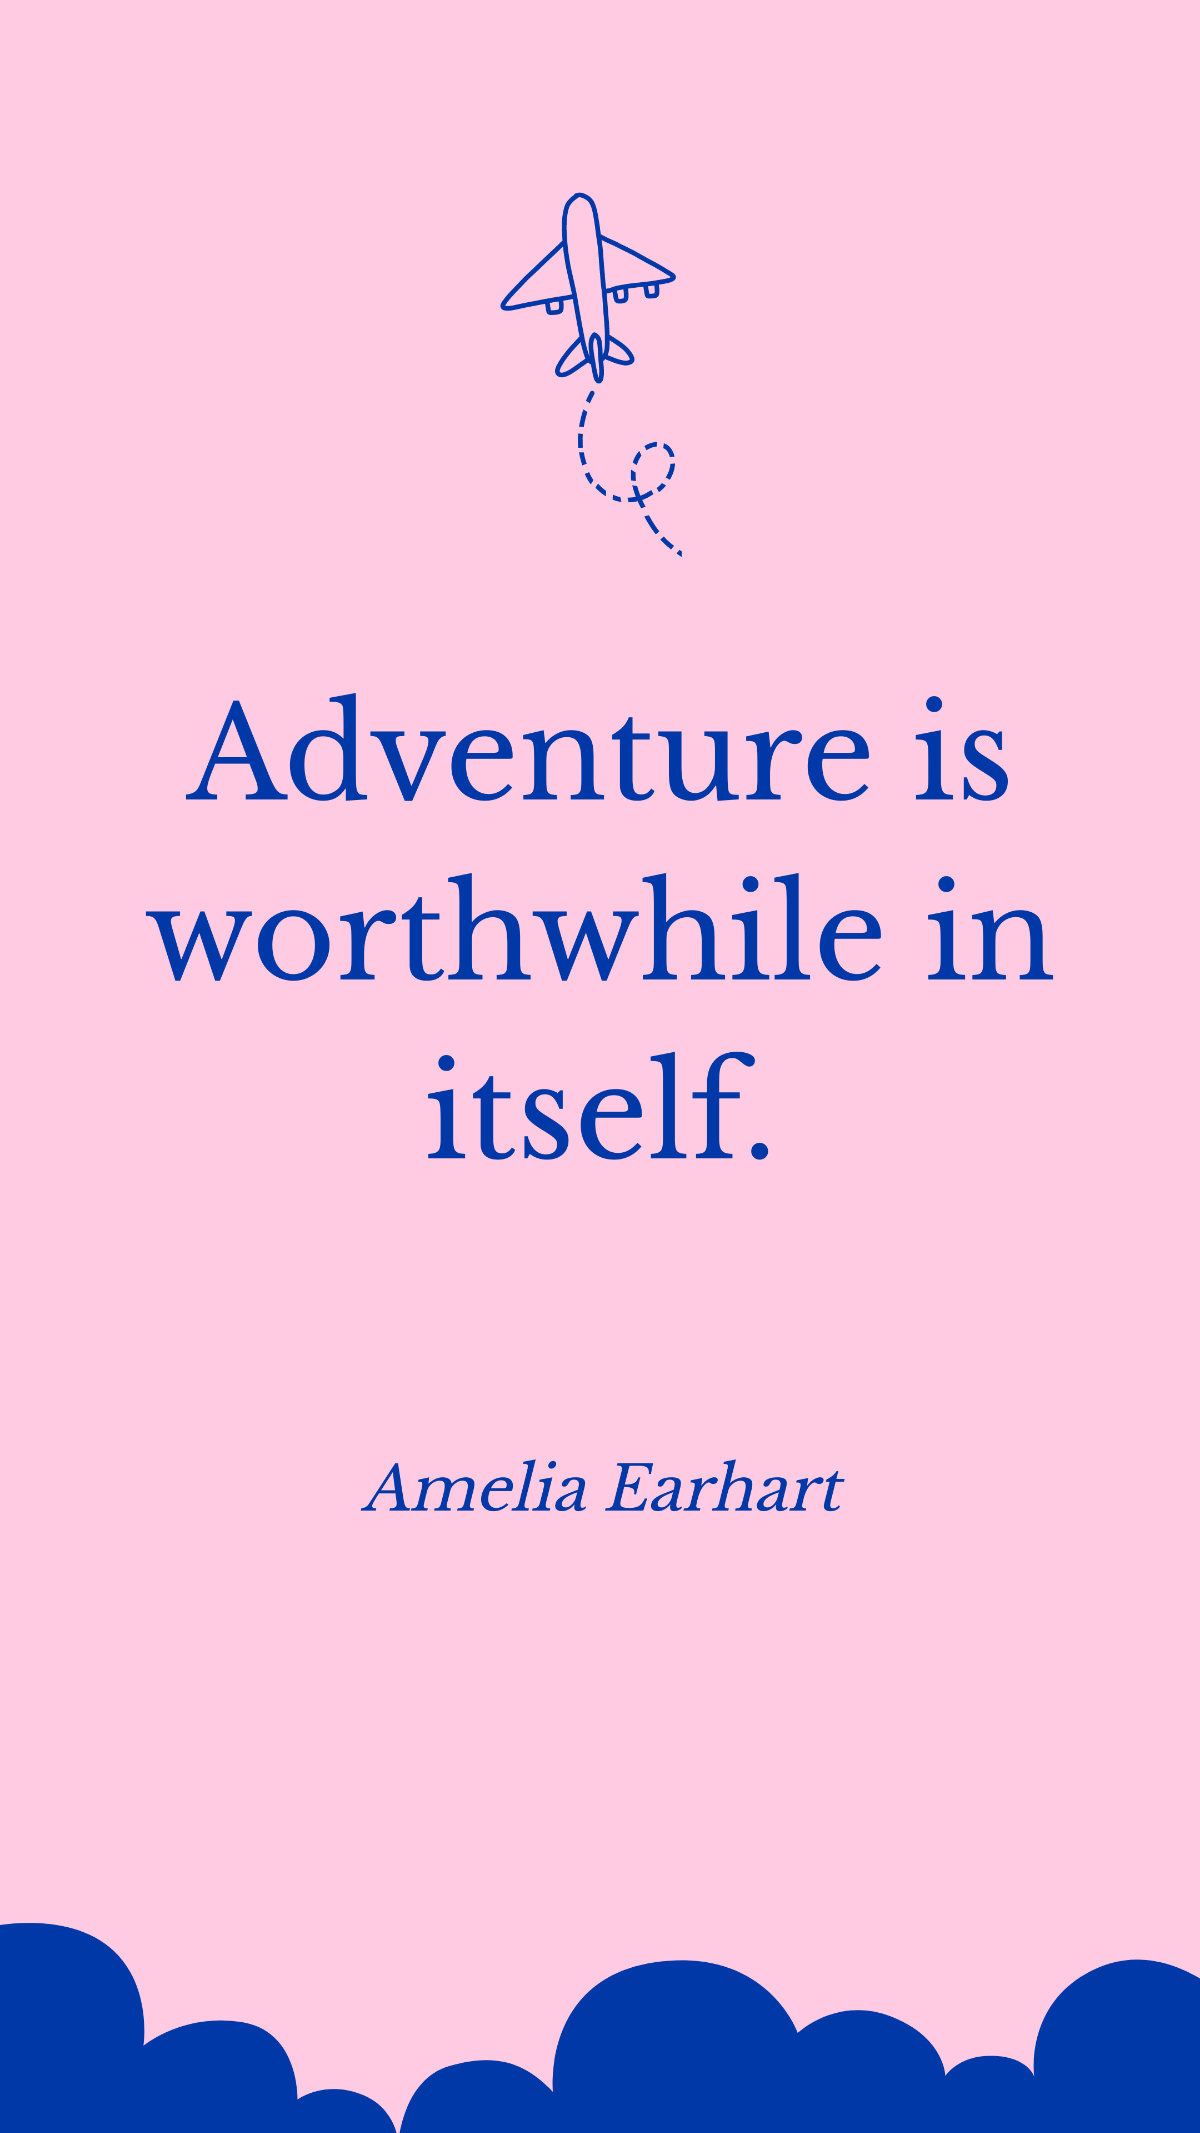 Amelia Earhart - Adventure is worthwhile in itself. Template